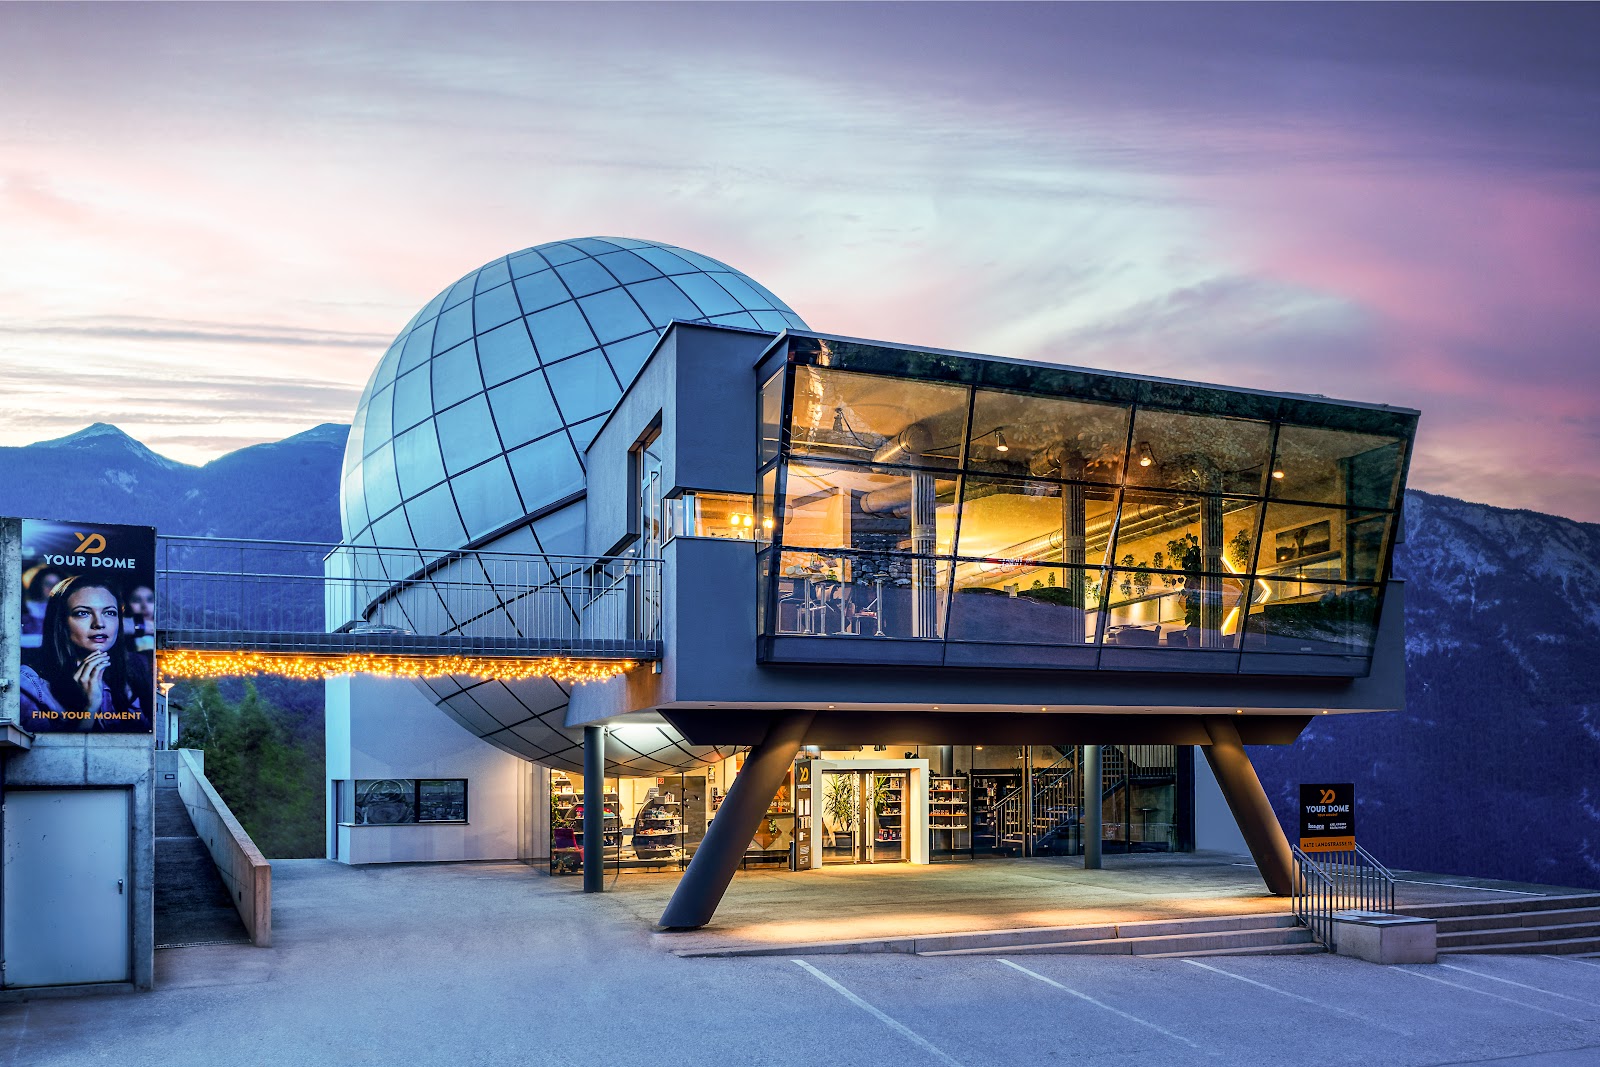 The Wall - Pink Floyd - Versant Power Astronomy Center and Maynard Jordan  Planetarium - University of Maine